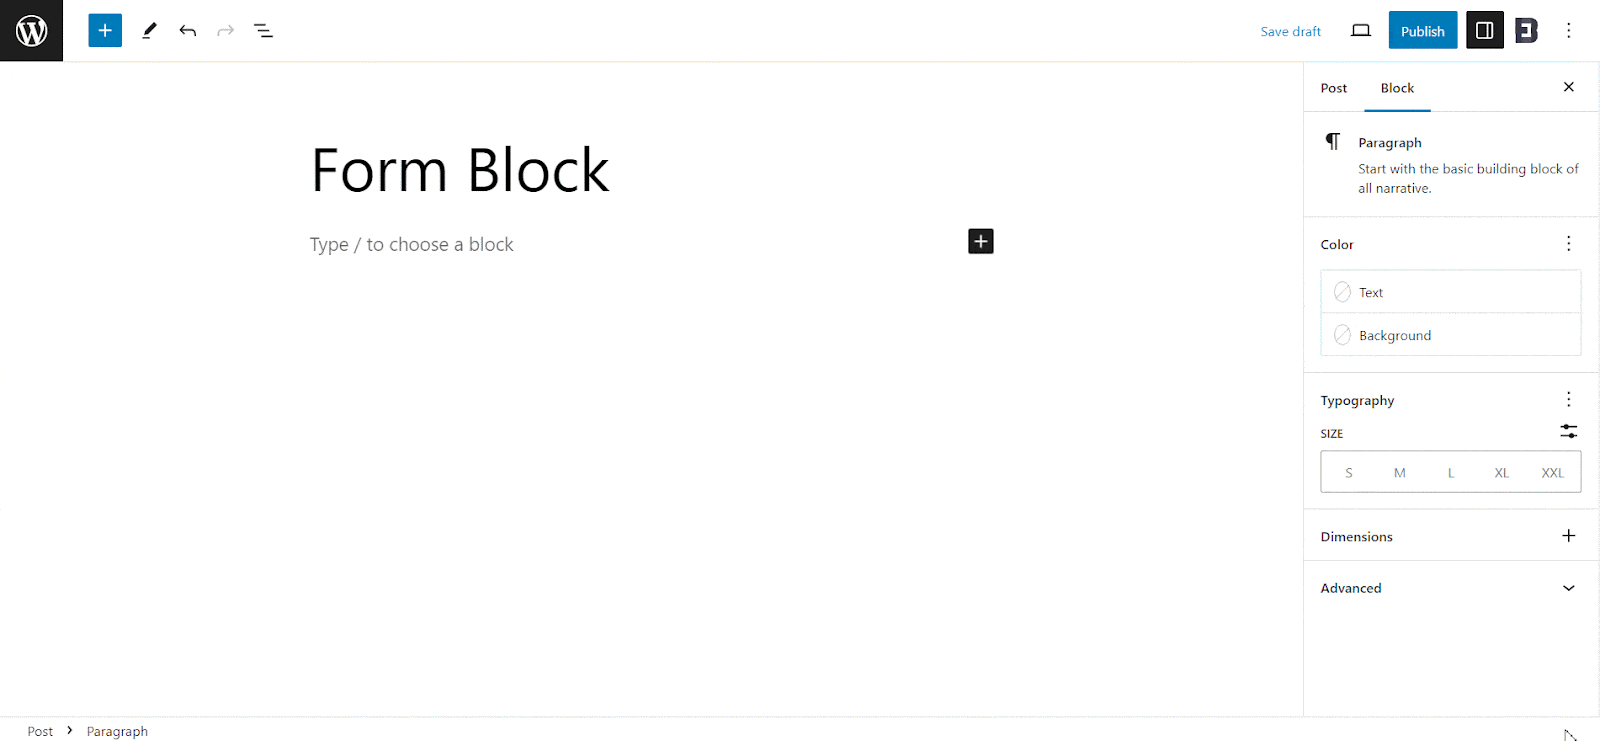 Form Block